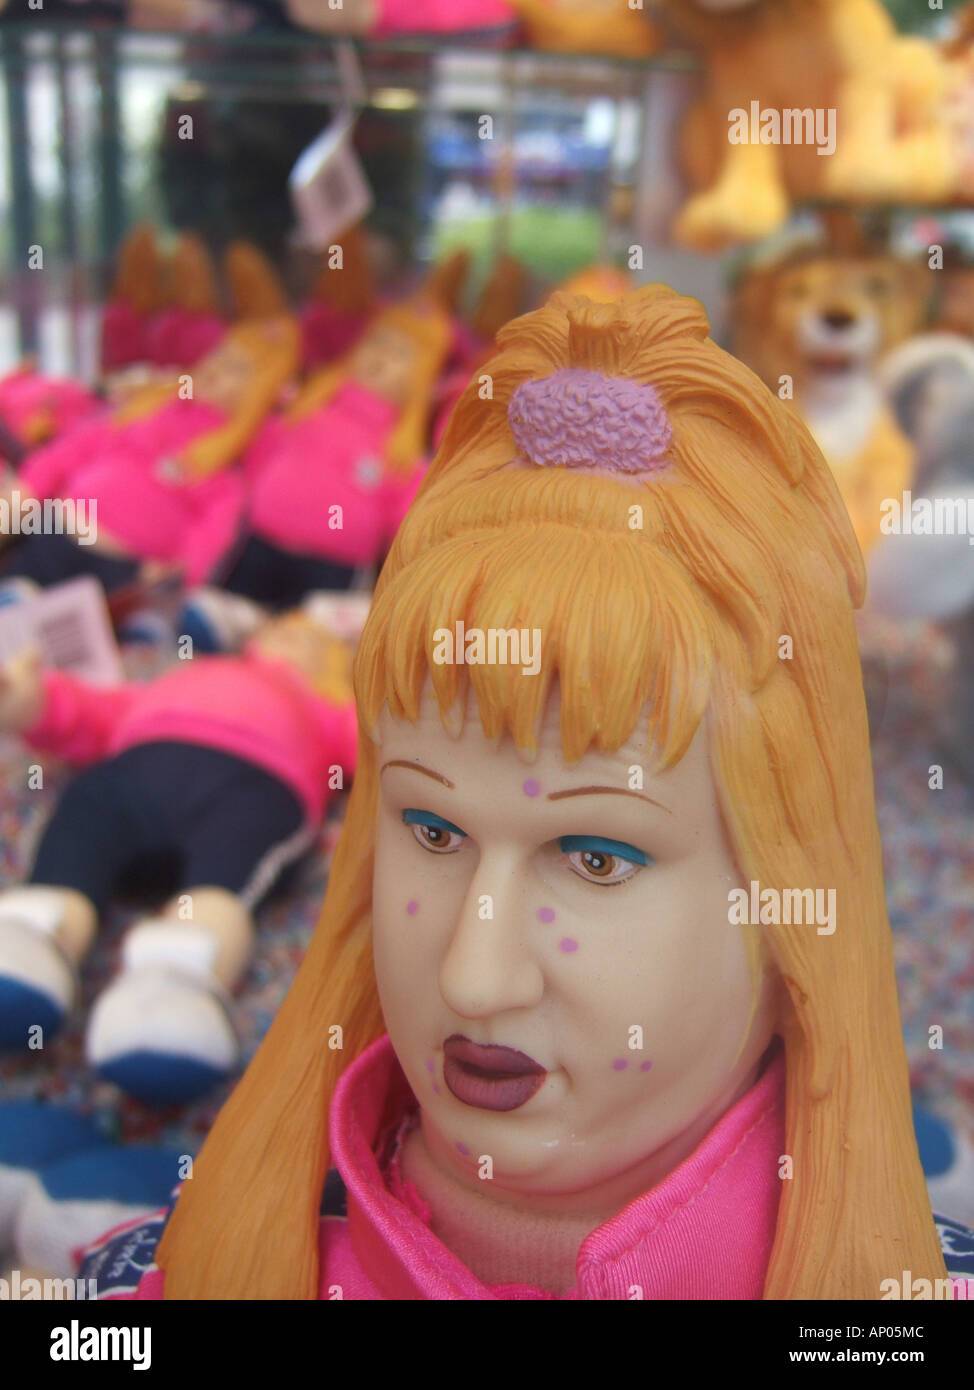 ugly woman doll in window Stock - Alamy